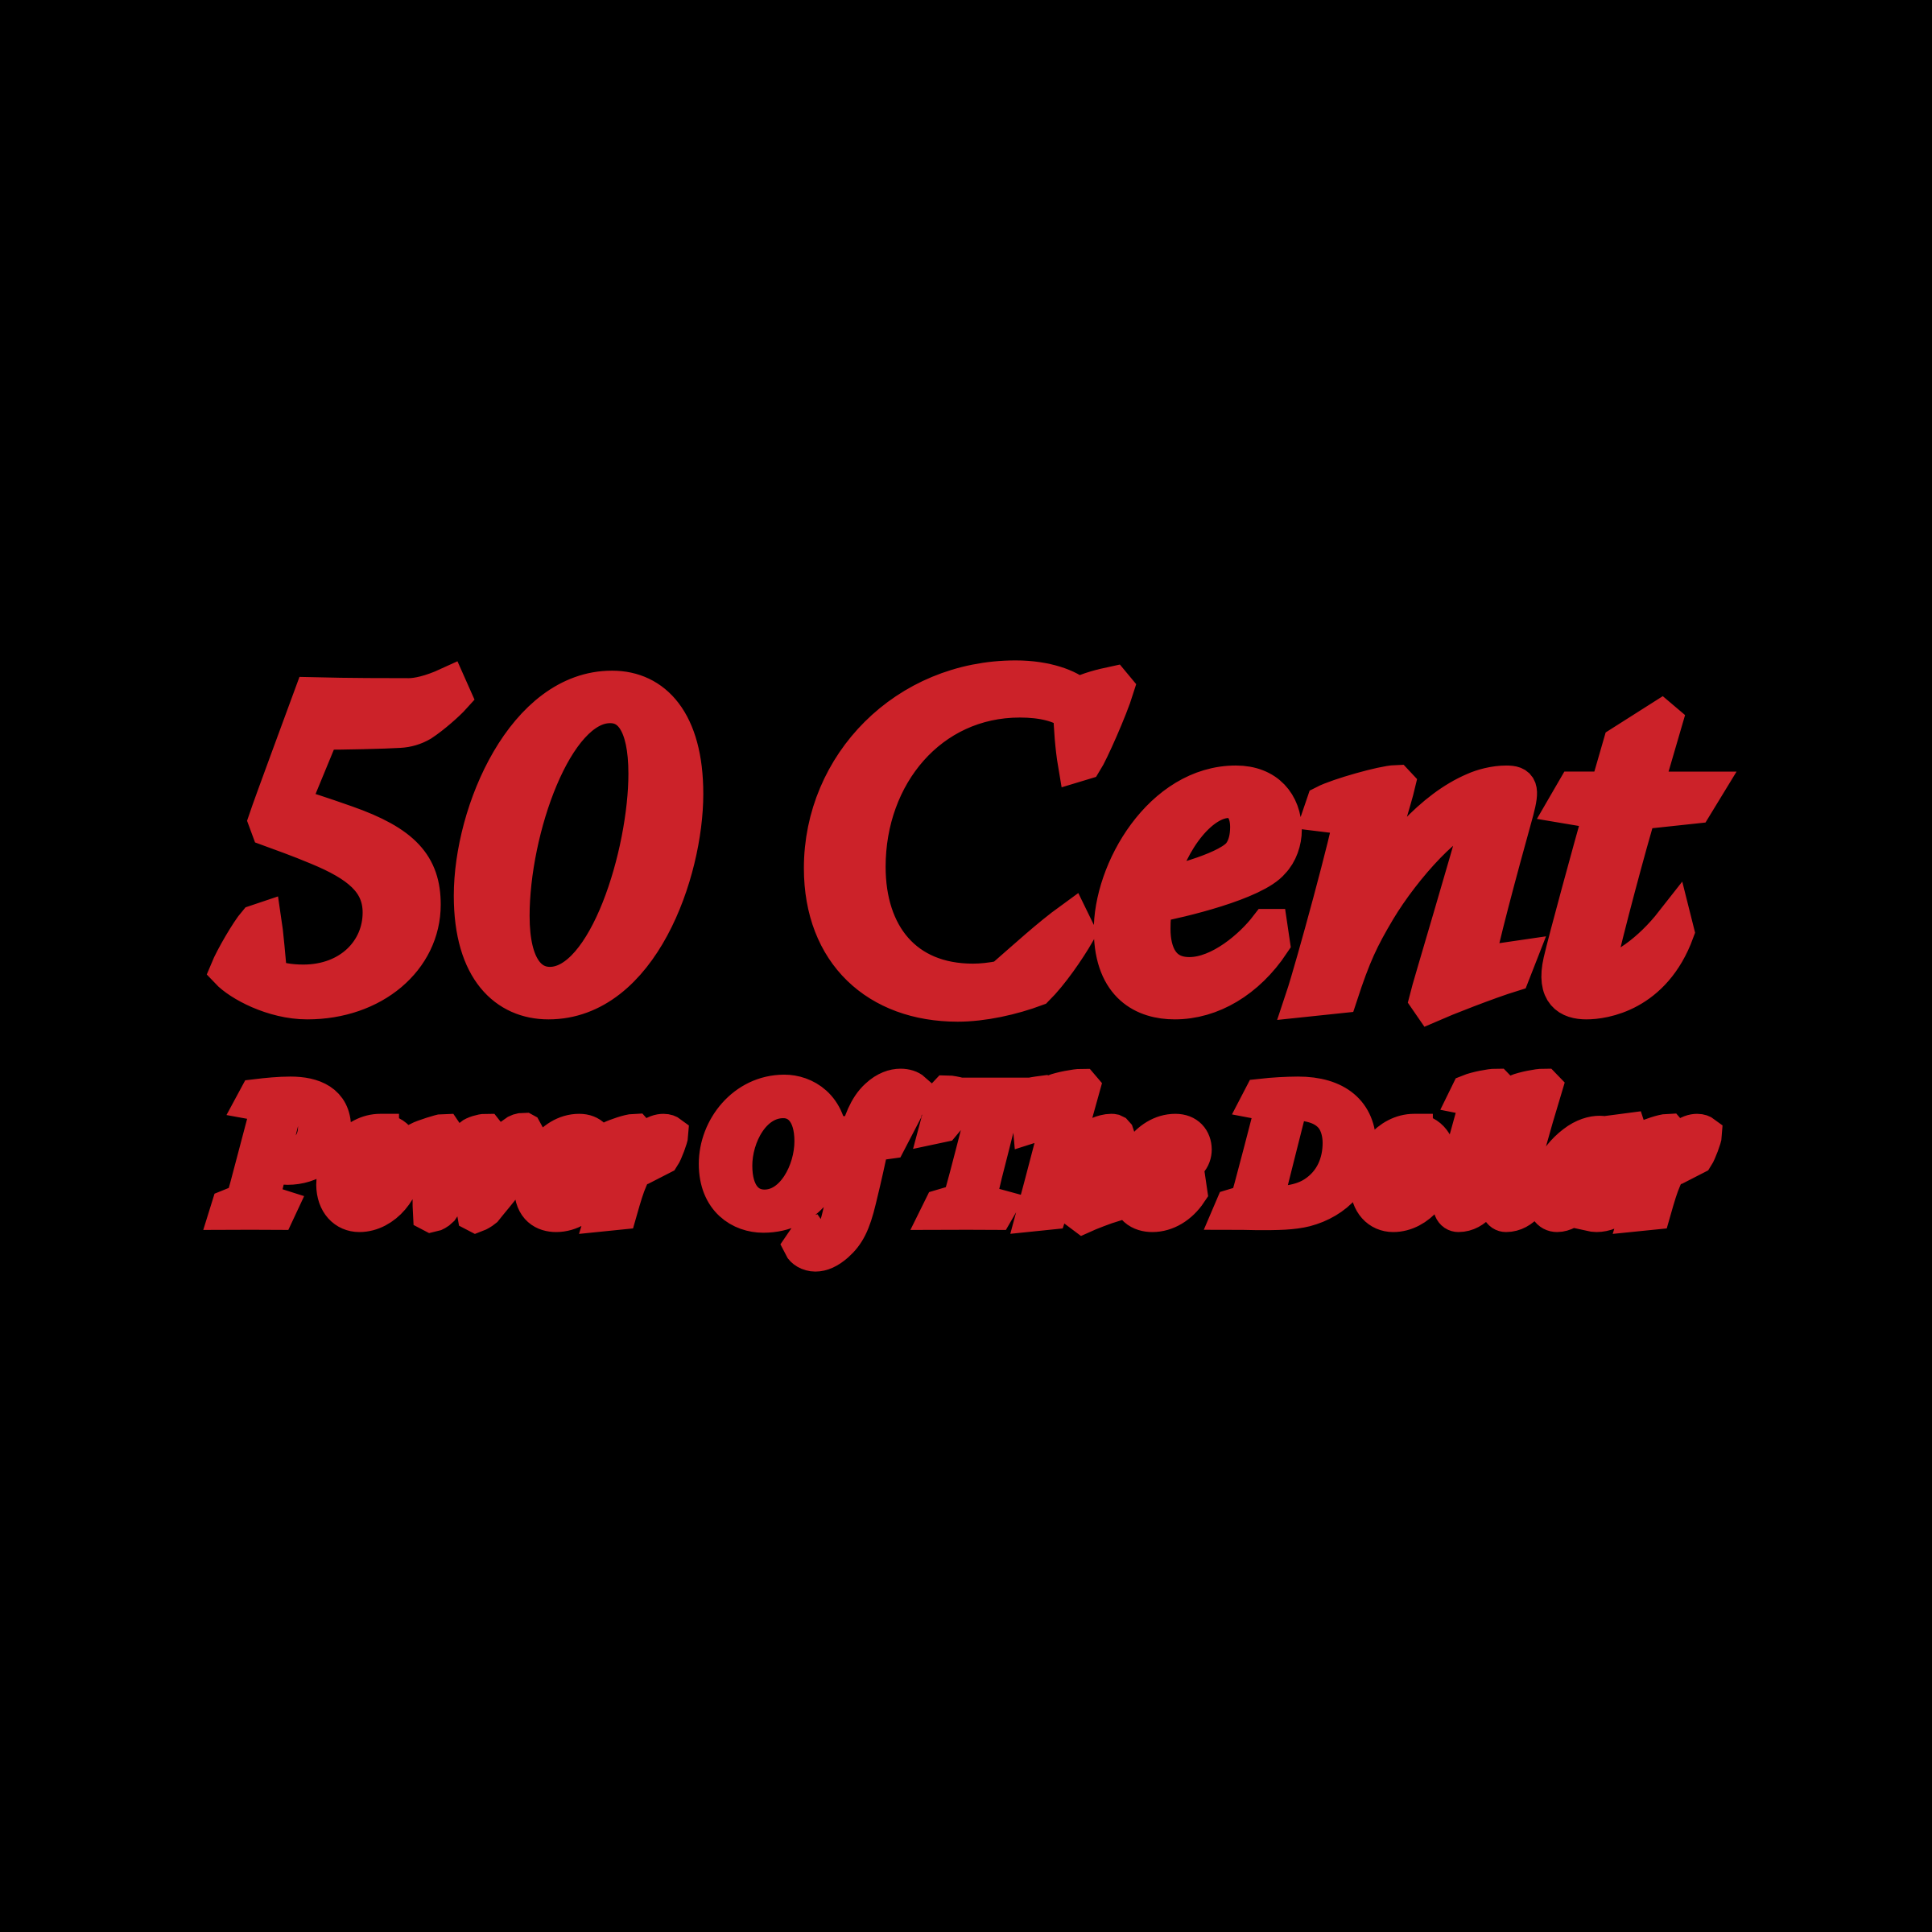 Cent Logo - 50 Cent Logo PNG Transparent & SVG Vector - Freebie Supply